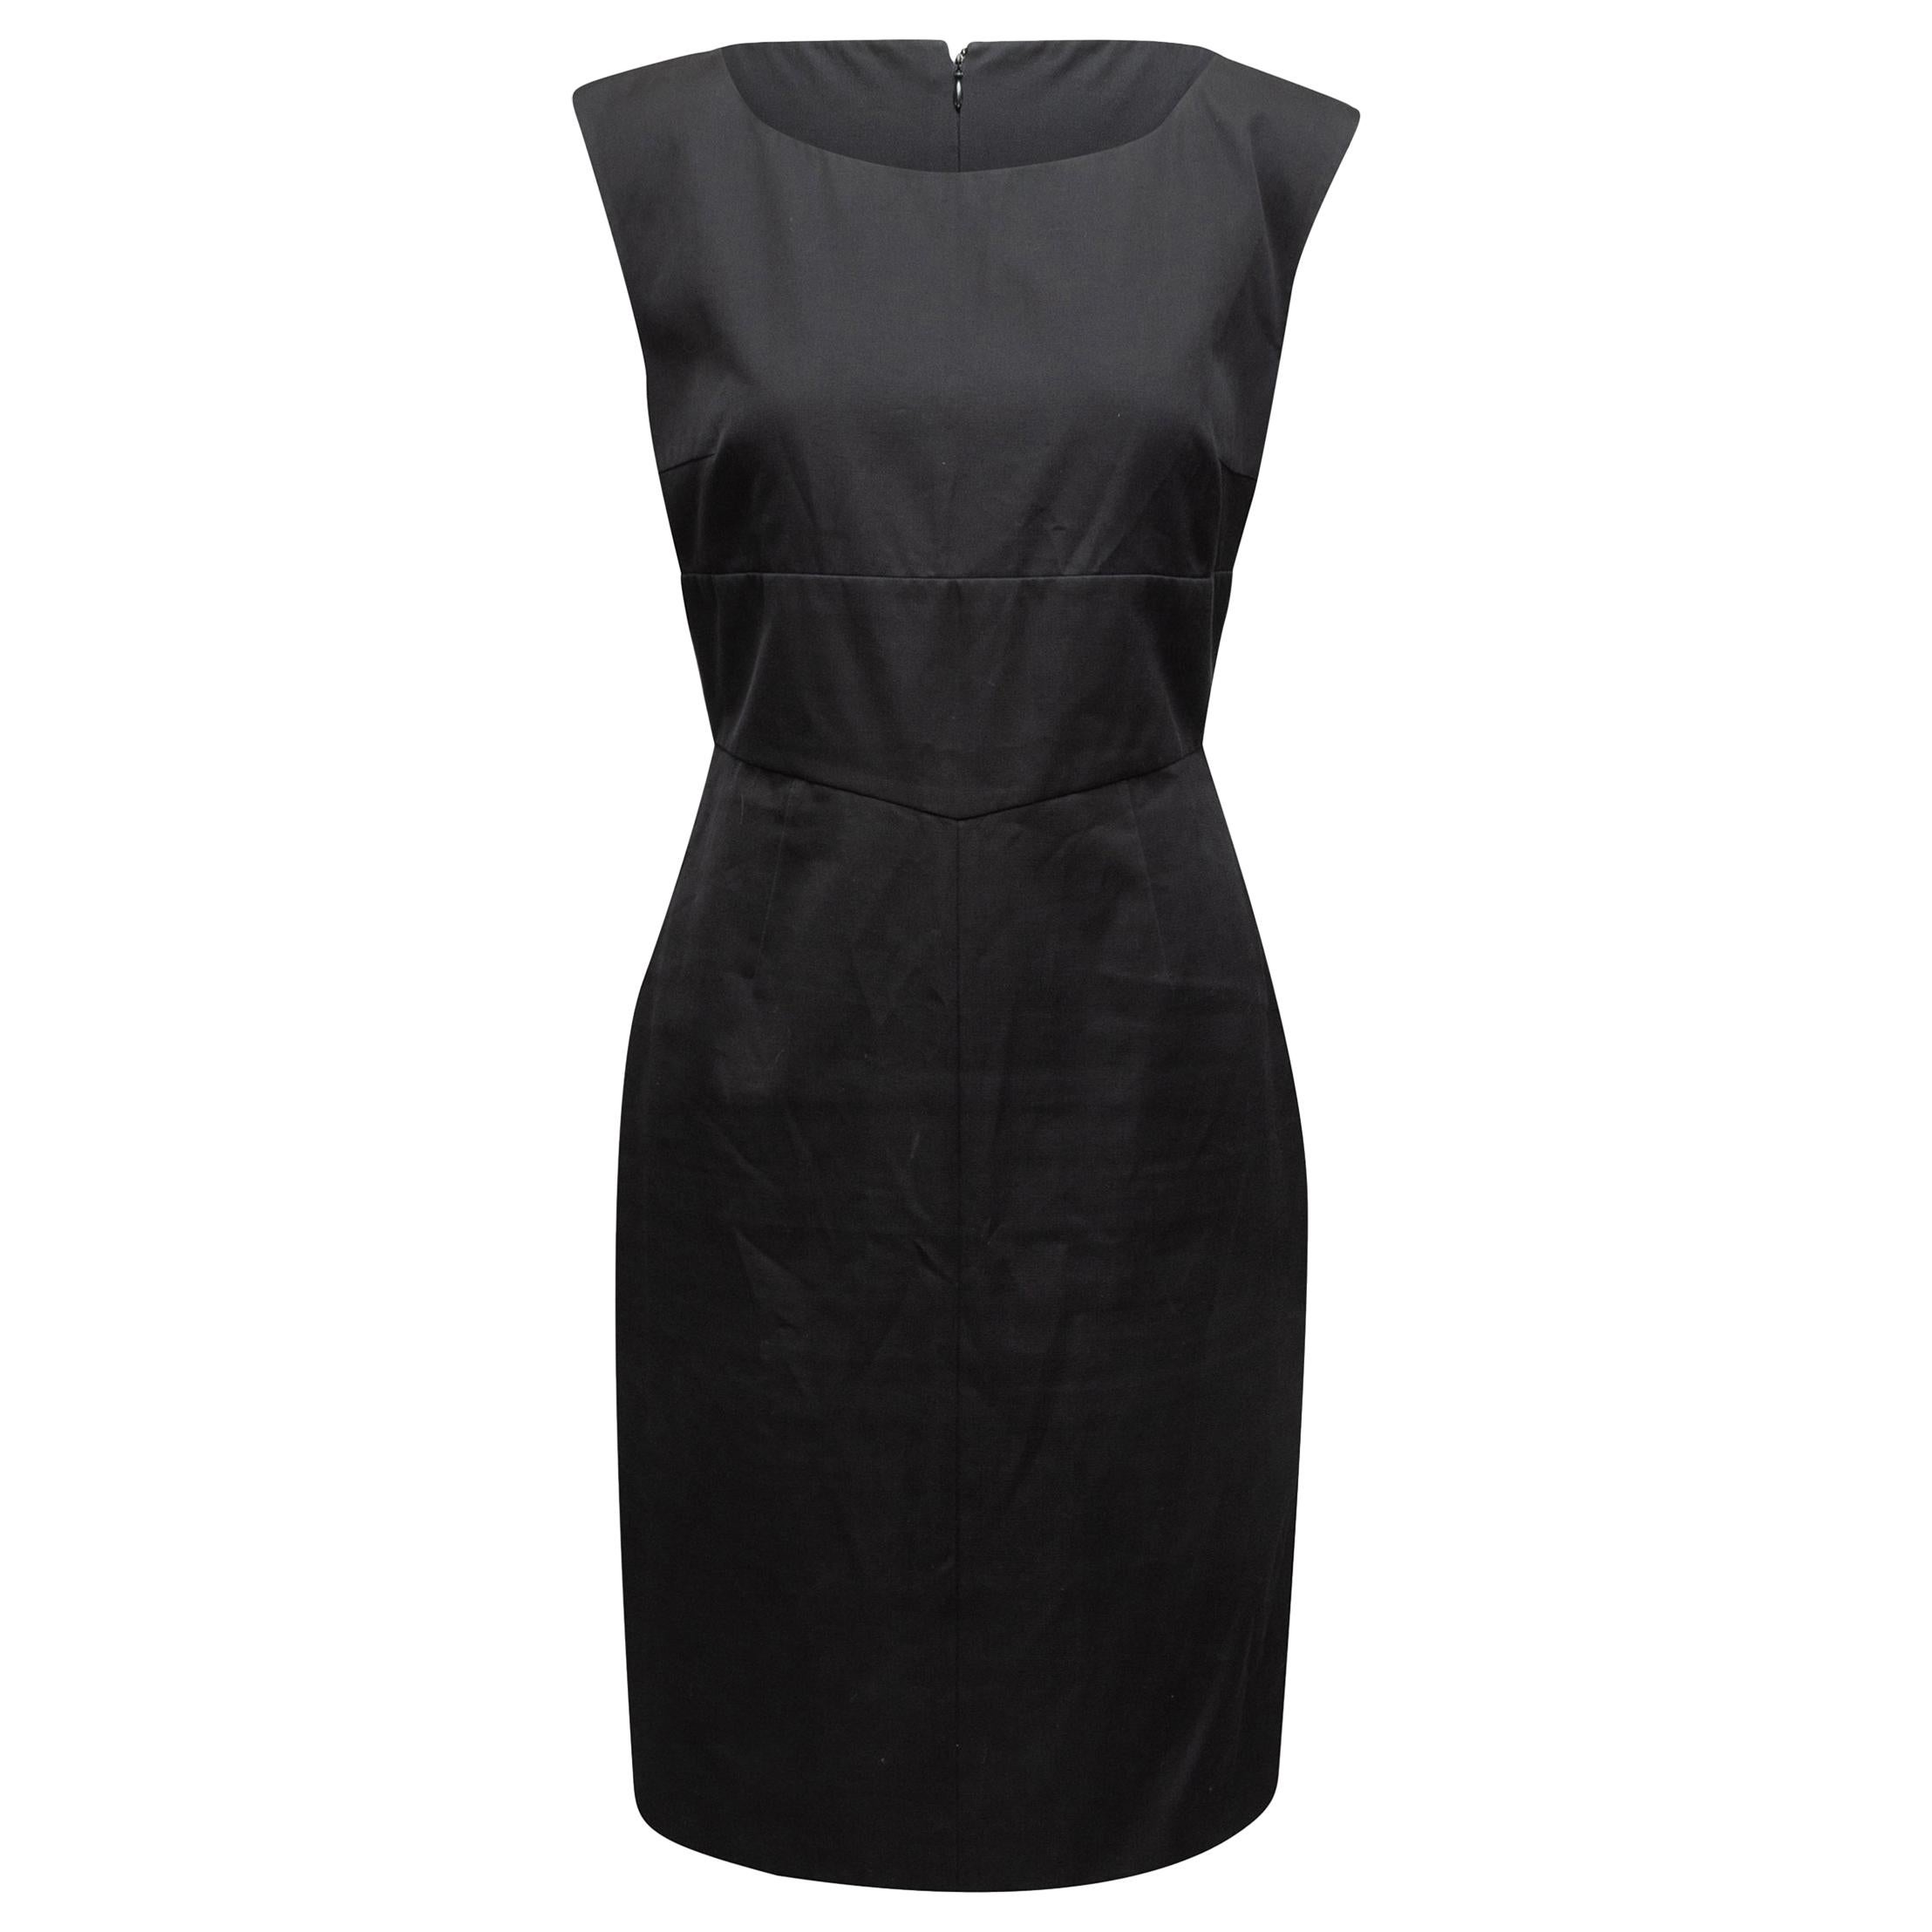  Prada Black Fitted Sleeveless Dress